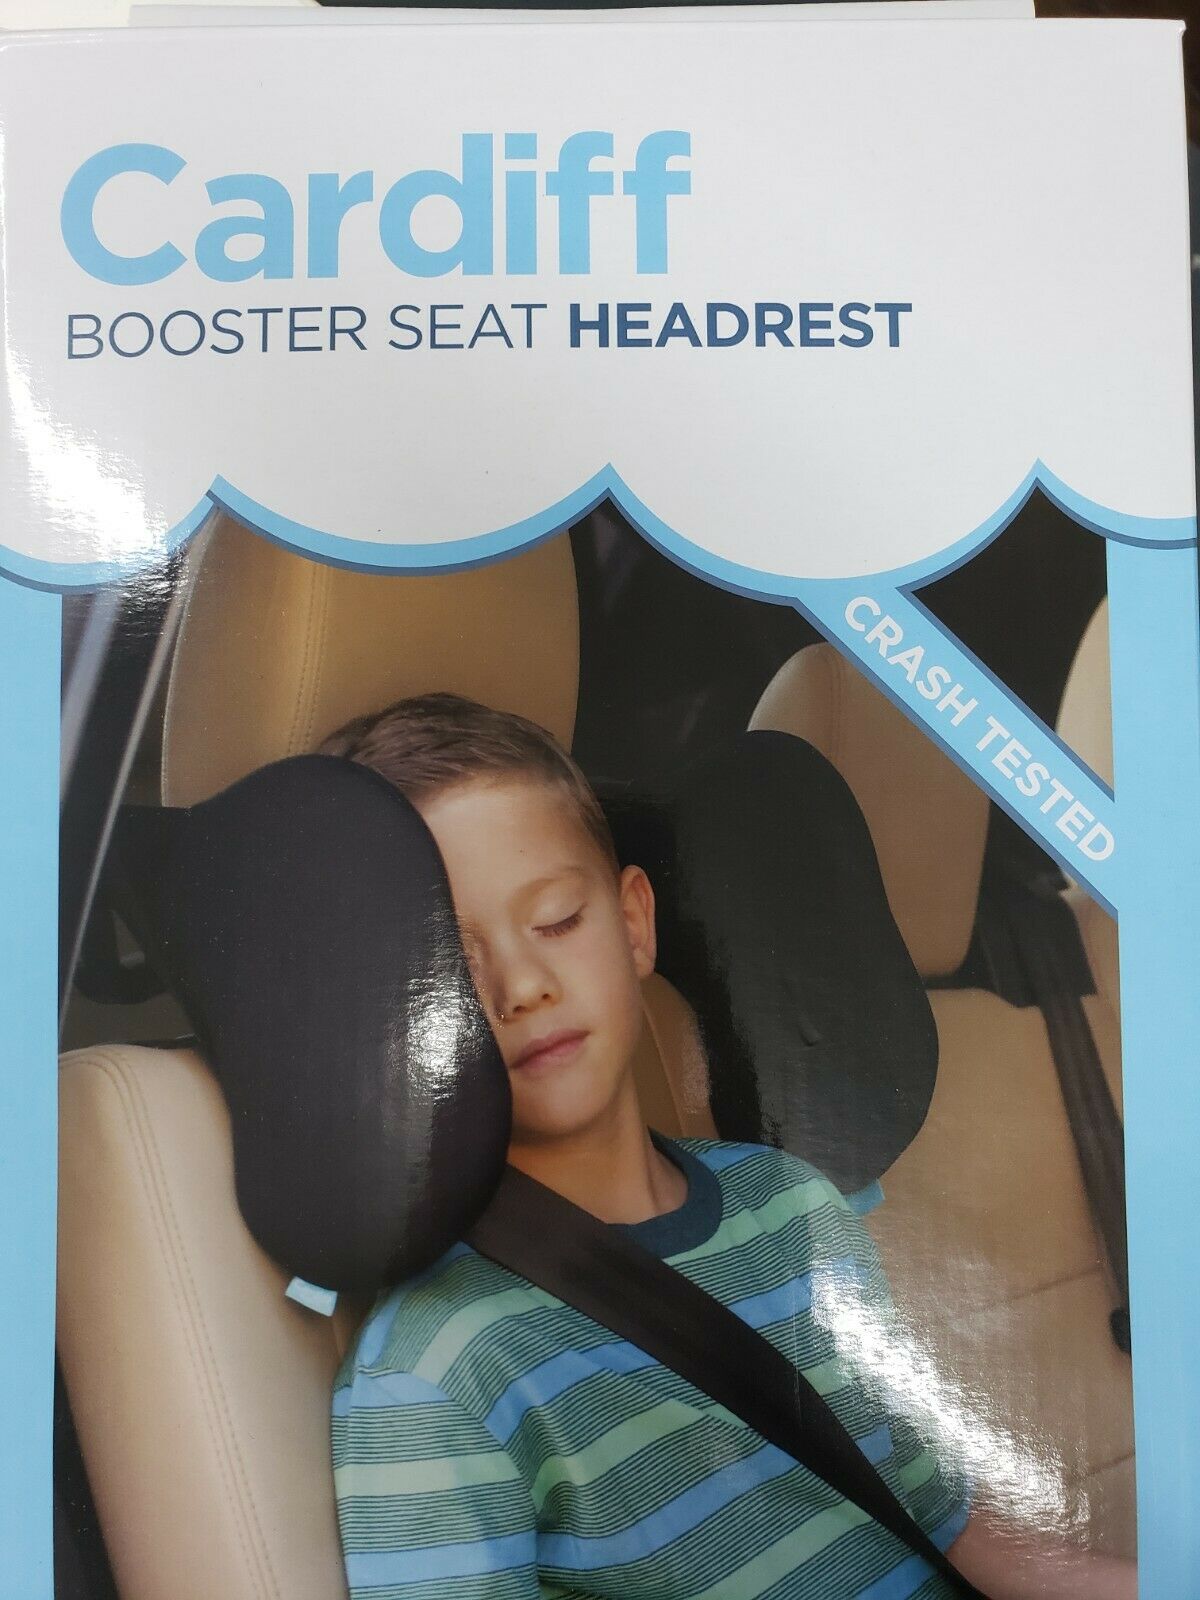 Cardiff Travel Booster Seat Headrest - Nib